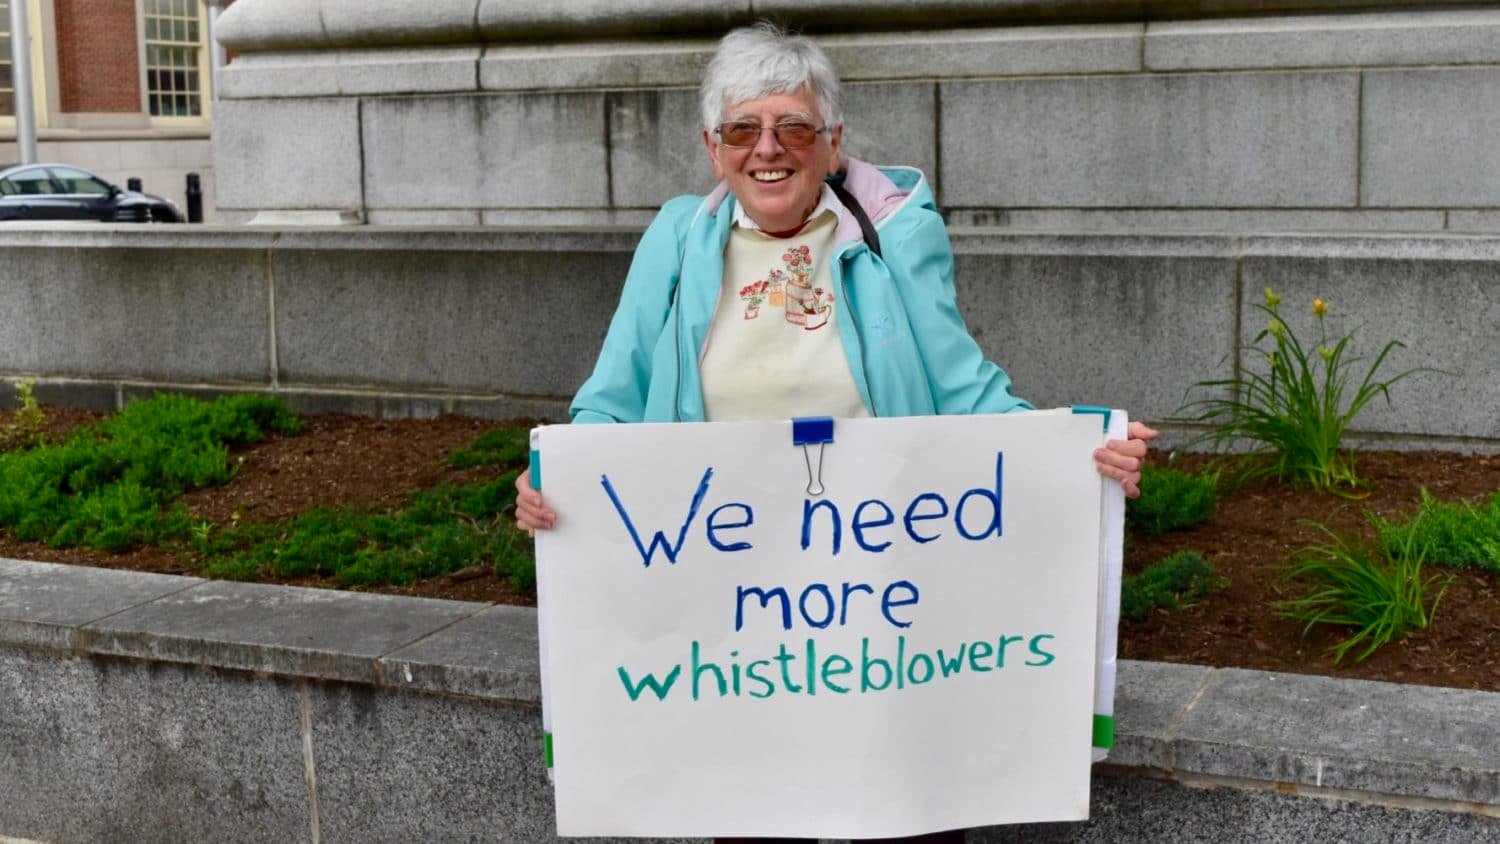 Whistleblowers defend democracy, say rights advocates